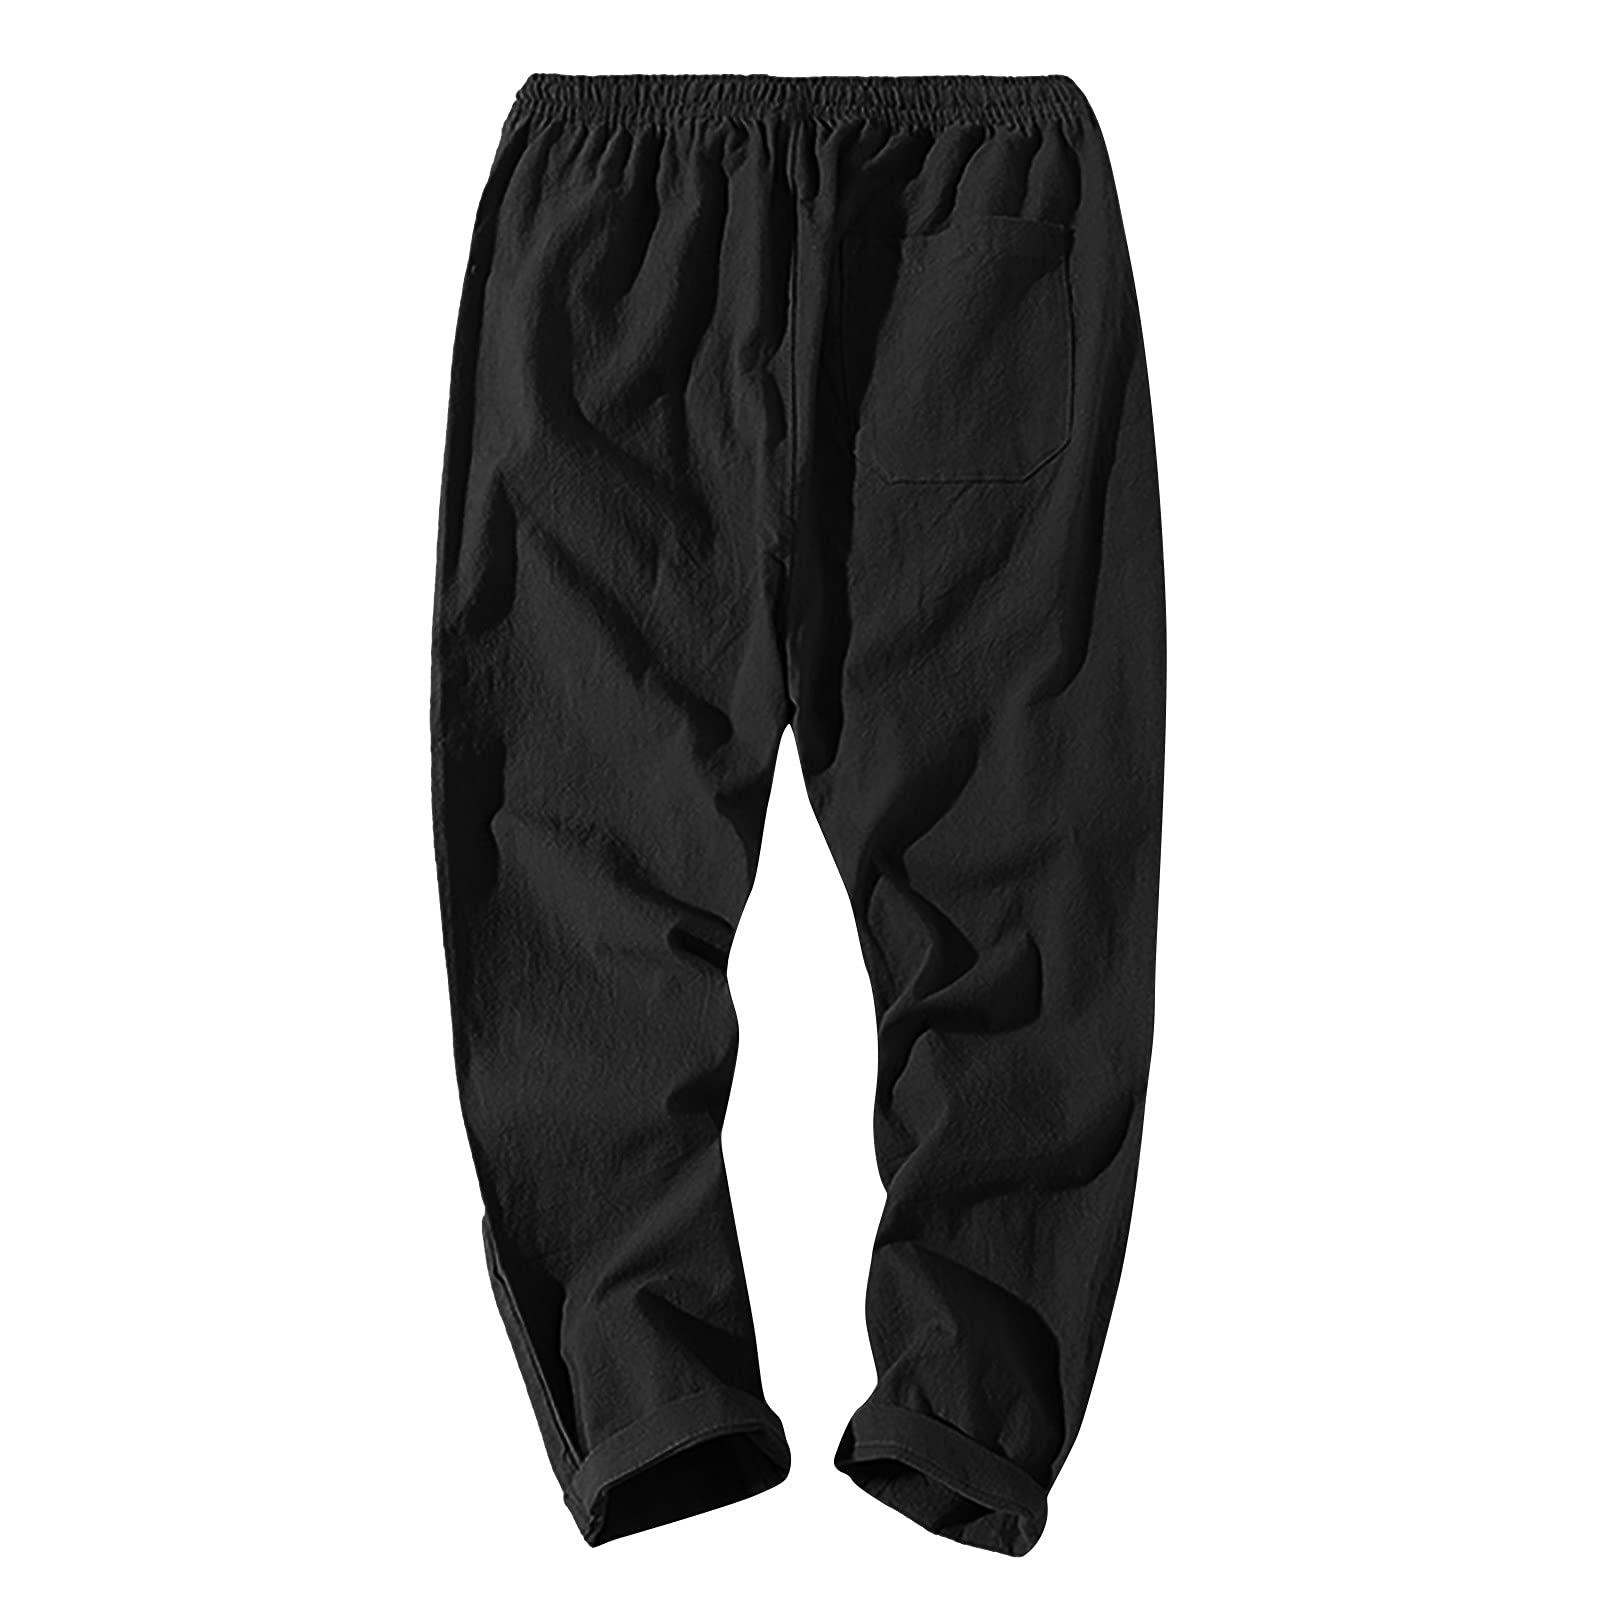 XIAXOGOOL Linen Pants Big & Tall Men's Loose Fit Elastic Waist Lightweight Quick Dry Drawstring Beach Yoga Trousers for Men